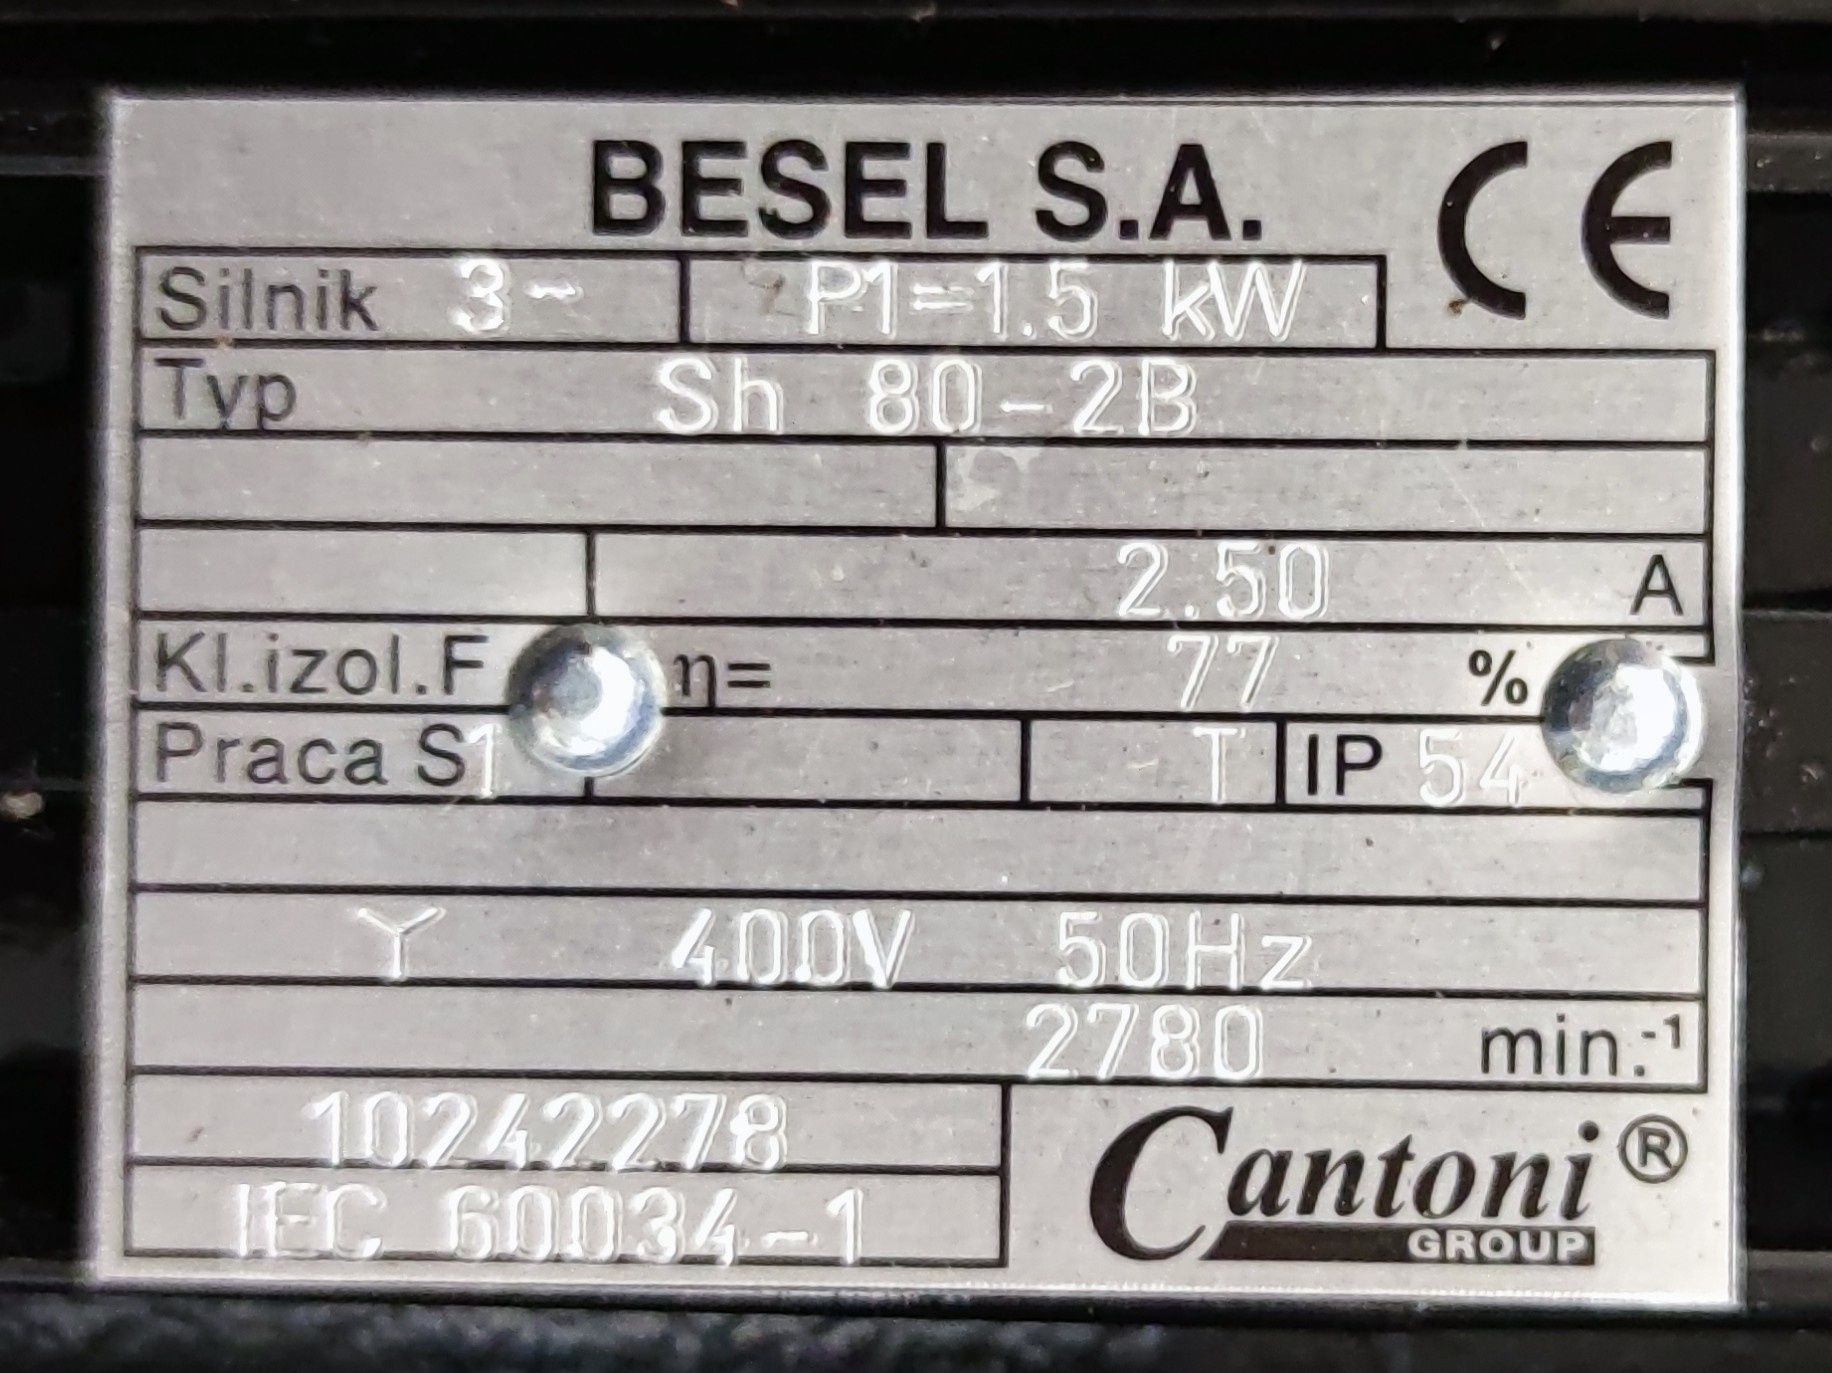 Silnik 3f 1,5 kw 2780 obr. Besel s.a. sh 80-2b